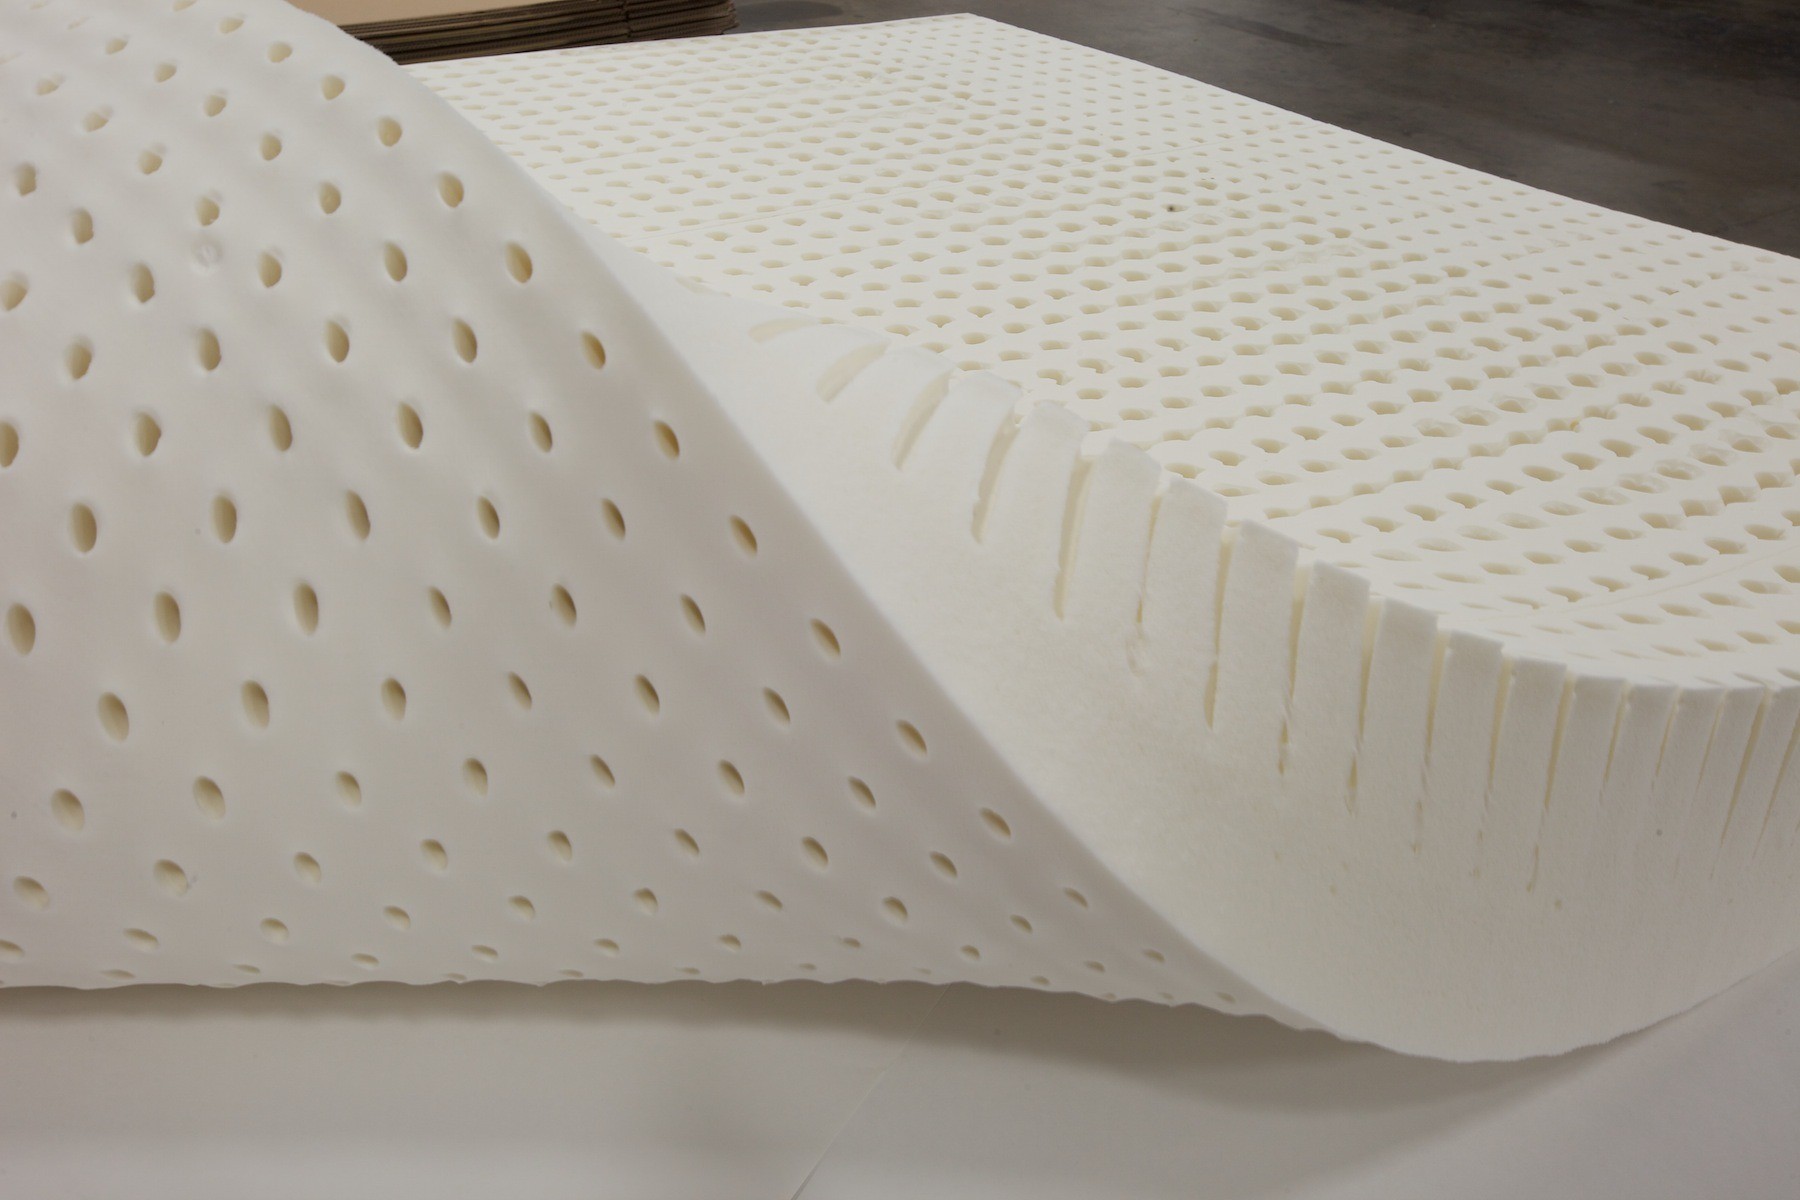 latex memory foam mattress australia